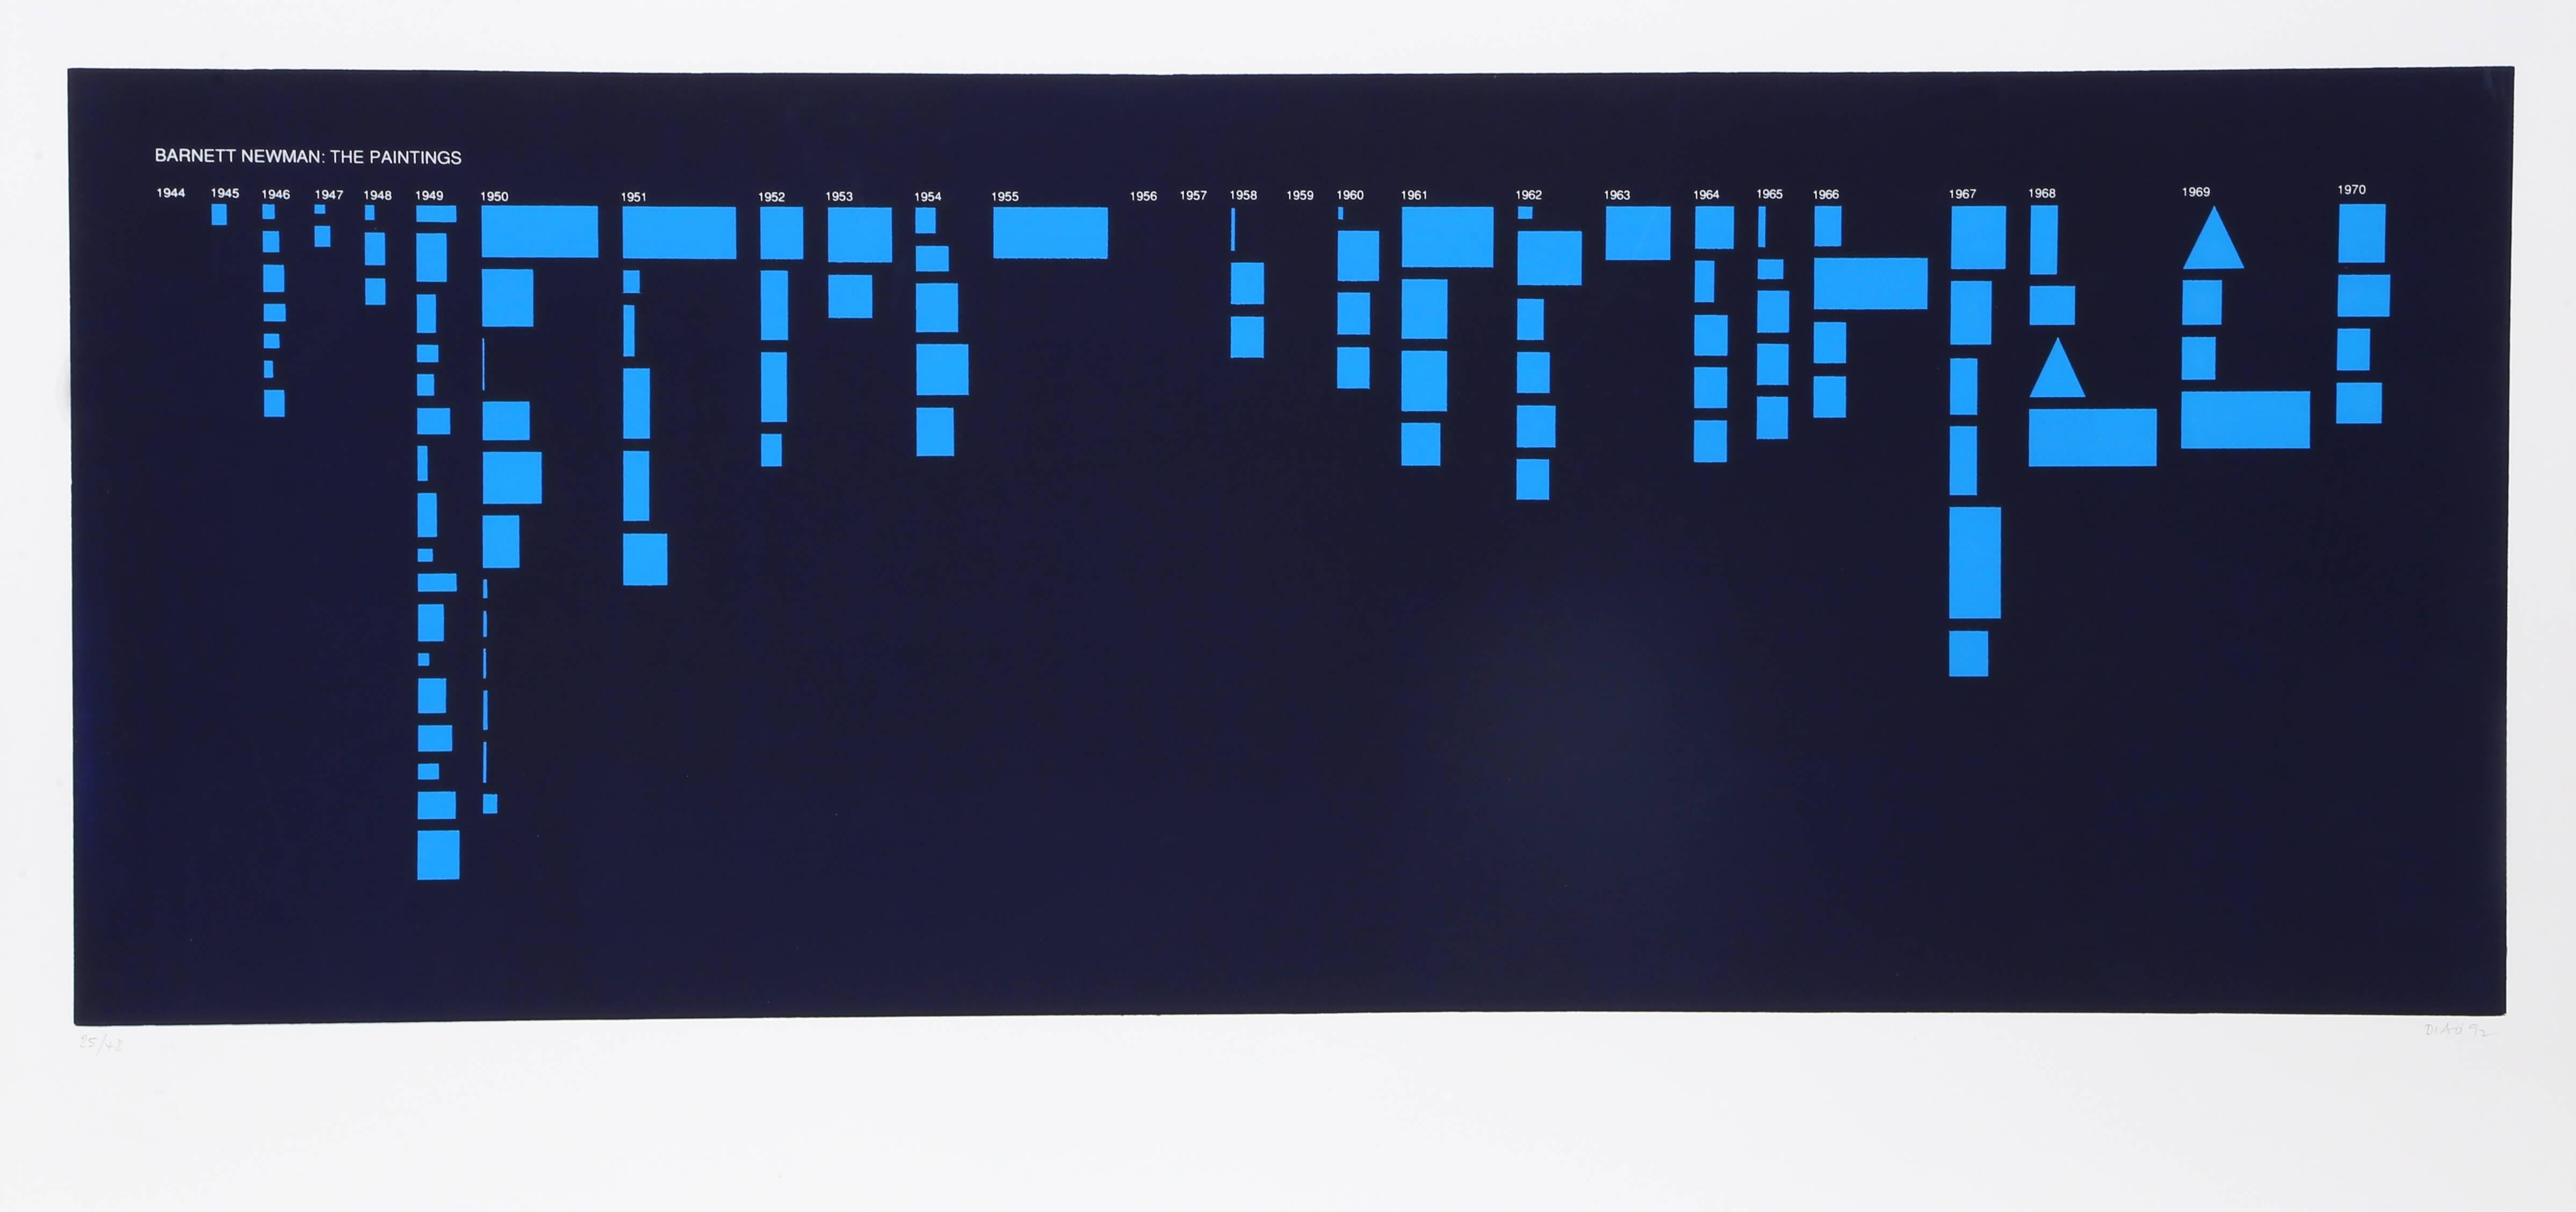 Barnett Newman: The Paintings (Blau), Abstrakter Siebdruck von David Diao